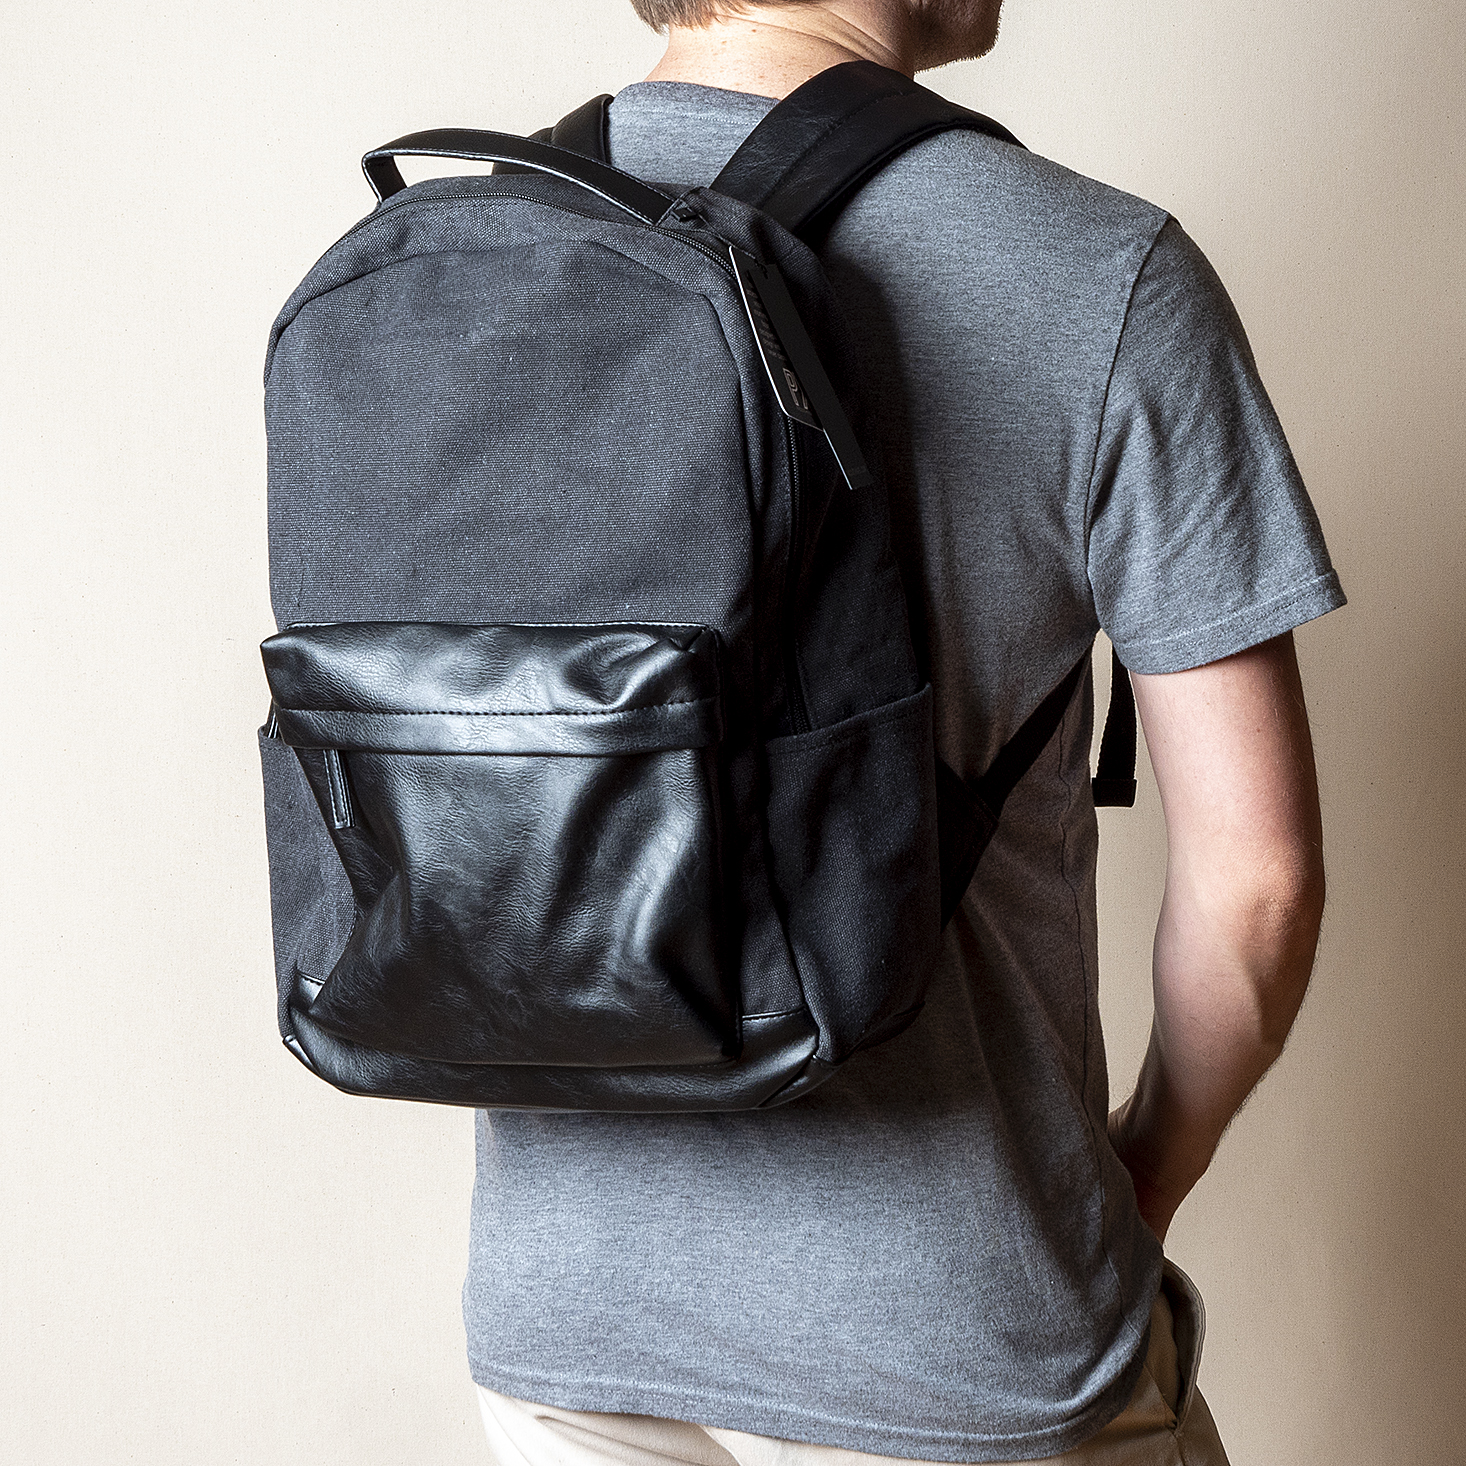 Landen Canvas Backpack - PX Clothing